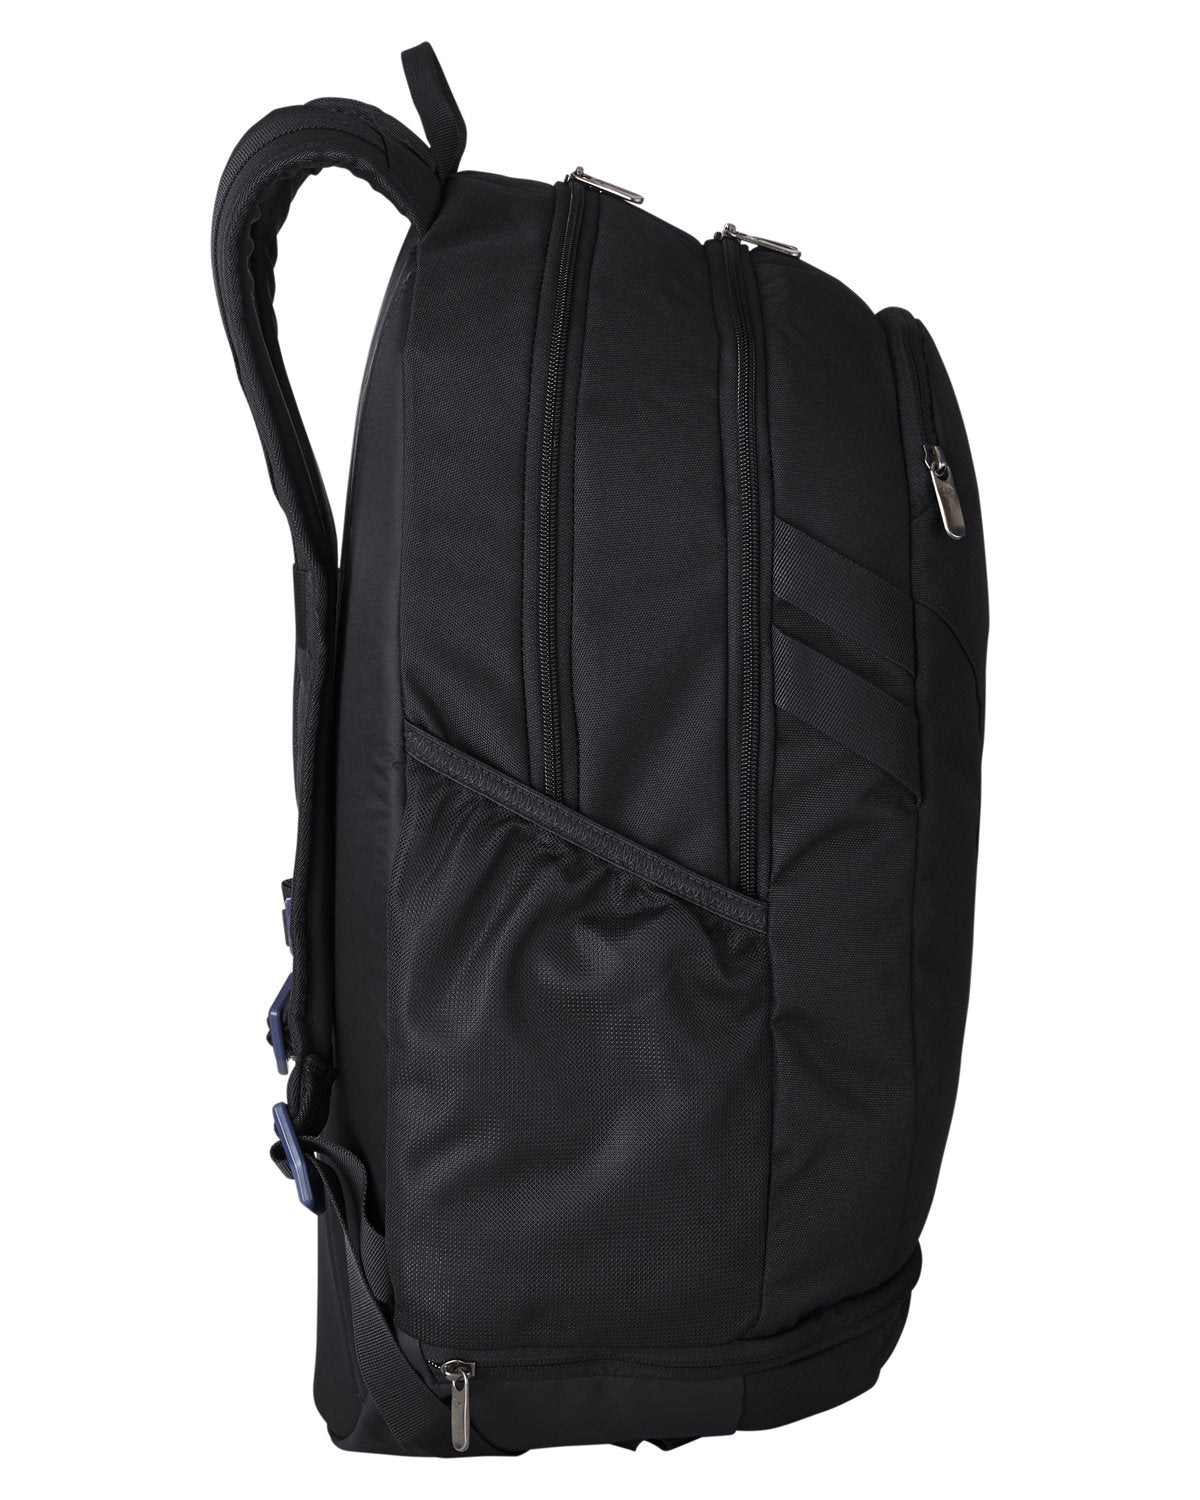 Under Armour Hustle Team Branded Backpacks, Black